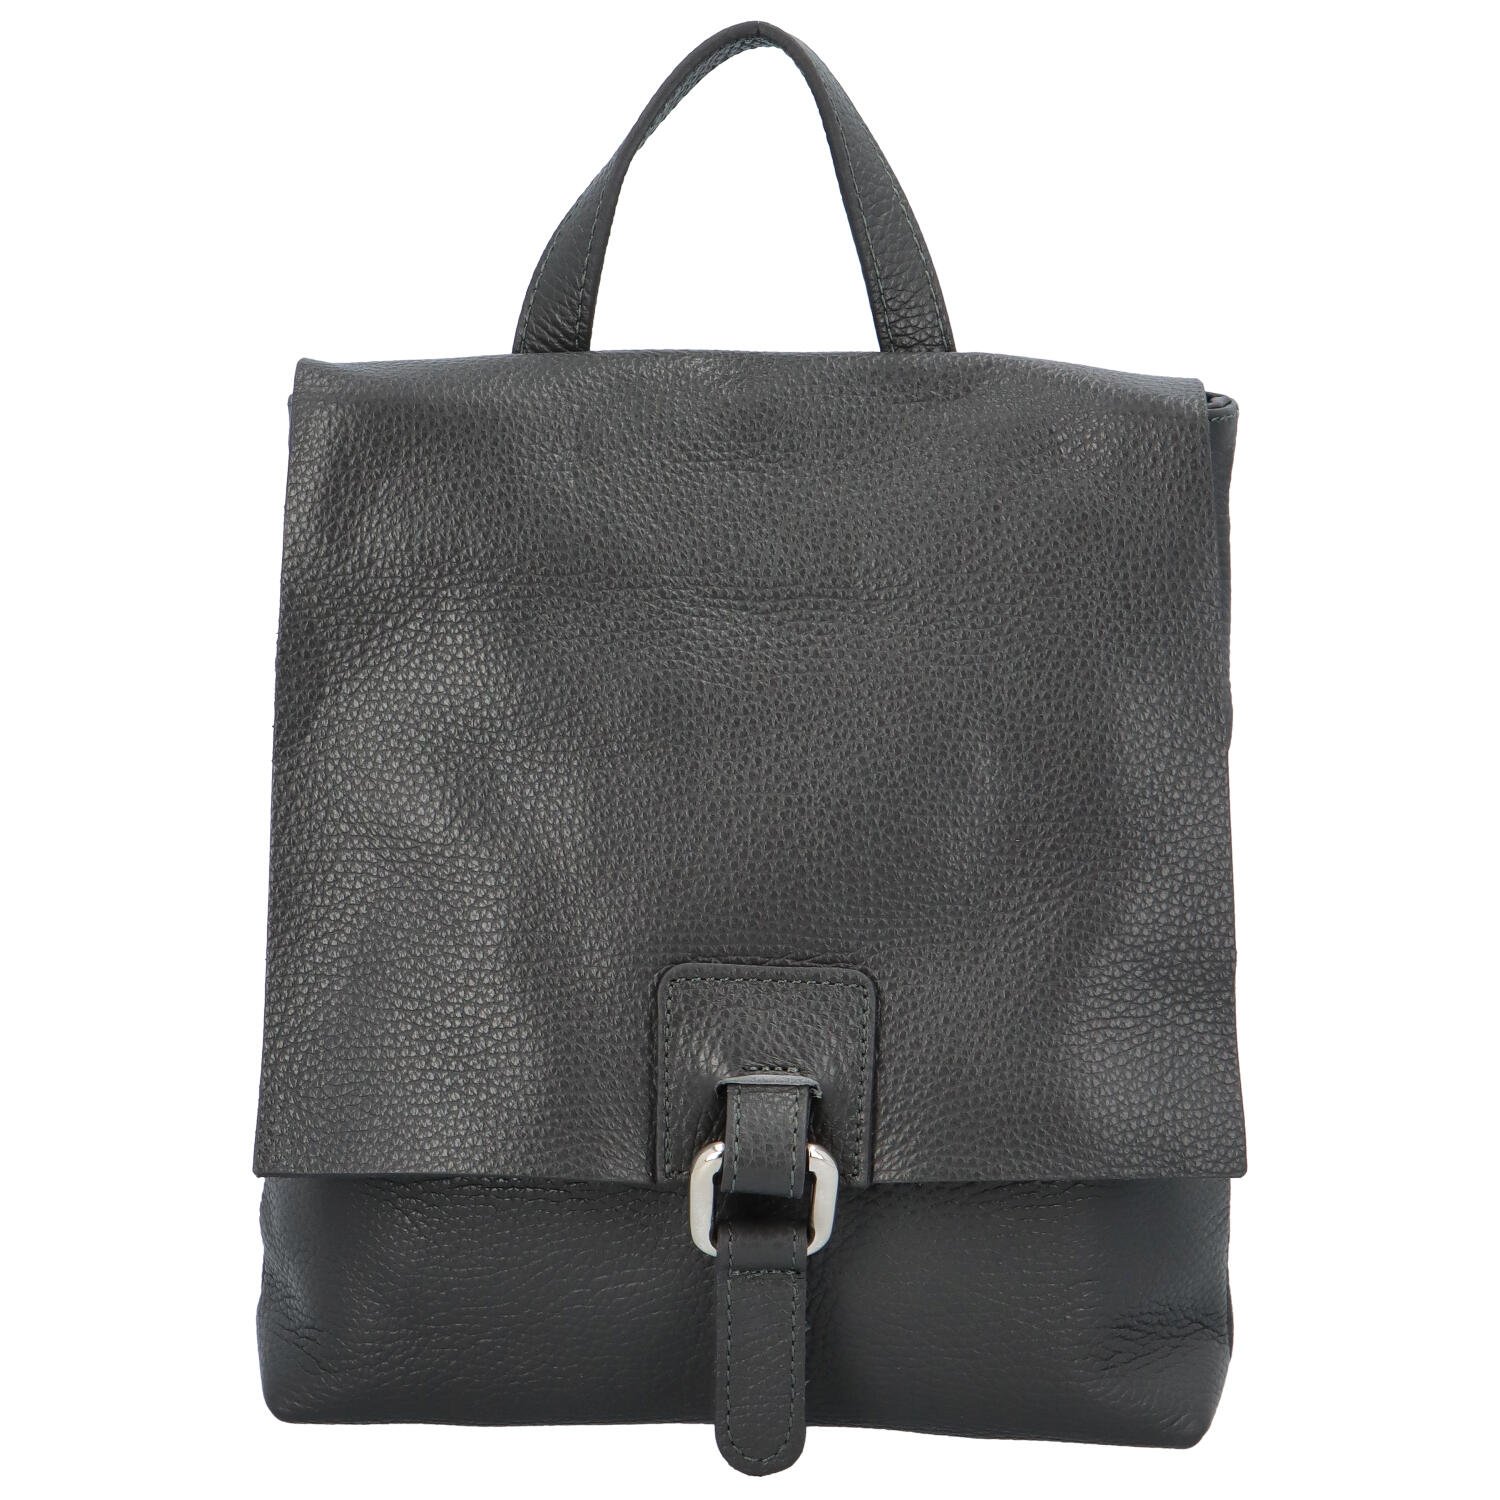 Dámský kožený batůžek kabelka tmavě šedý - ItalY Francesco Small